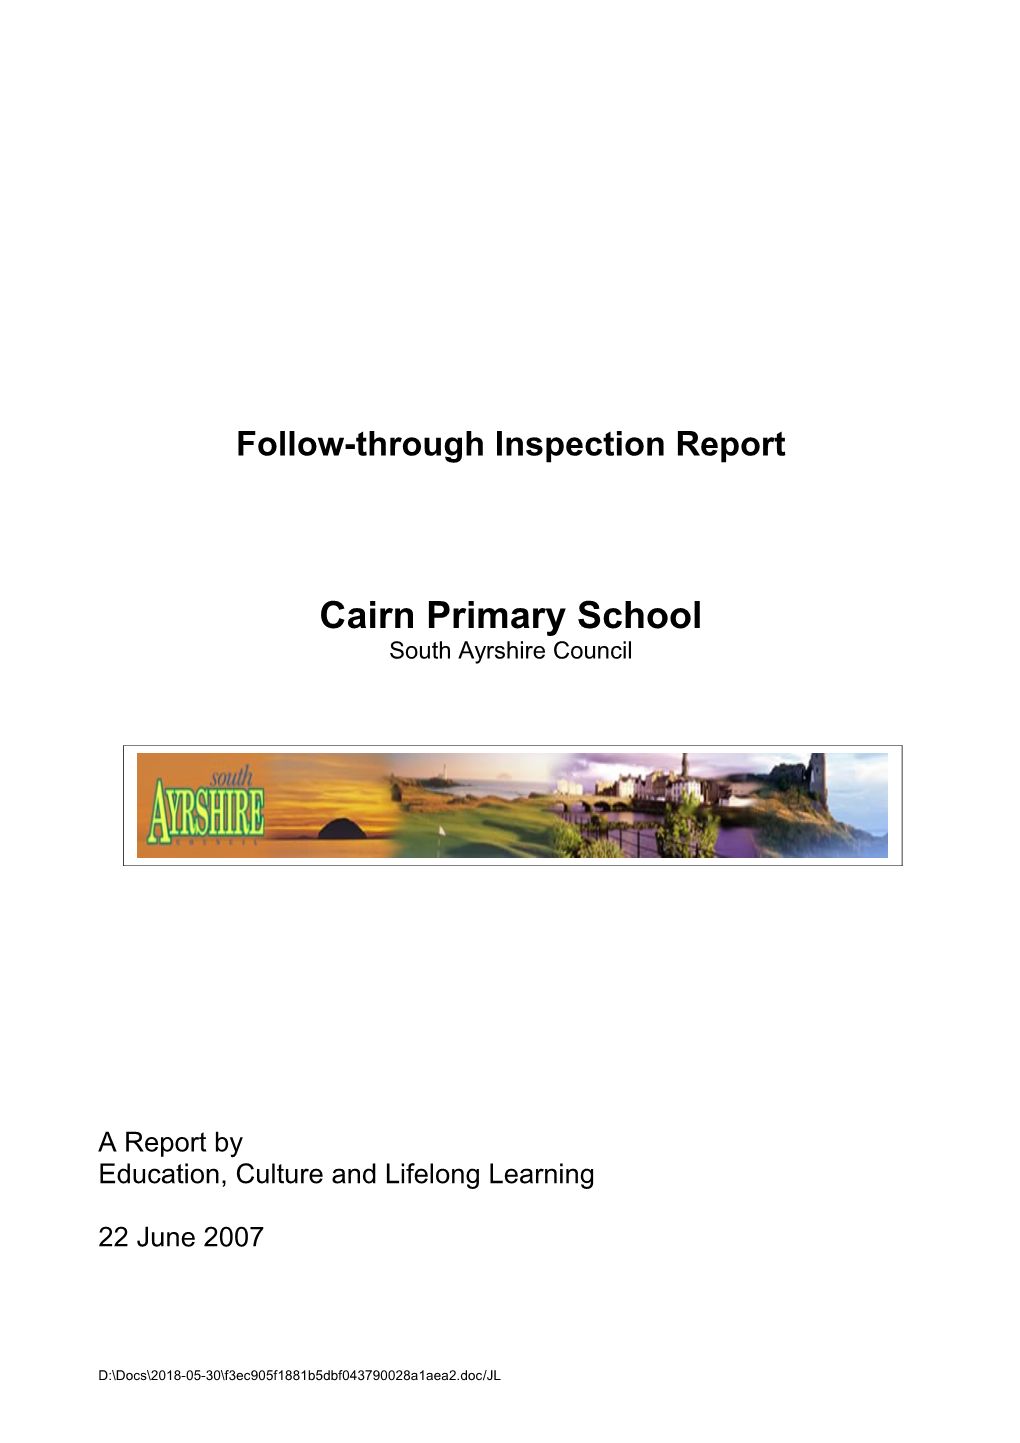 Follow-Through Inspection Report